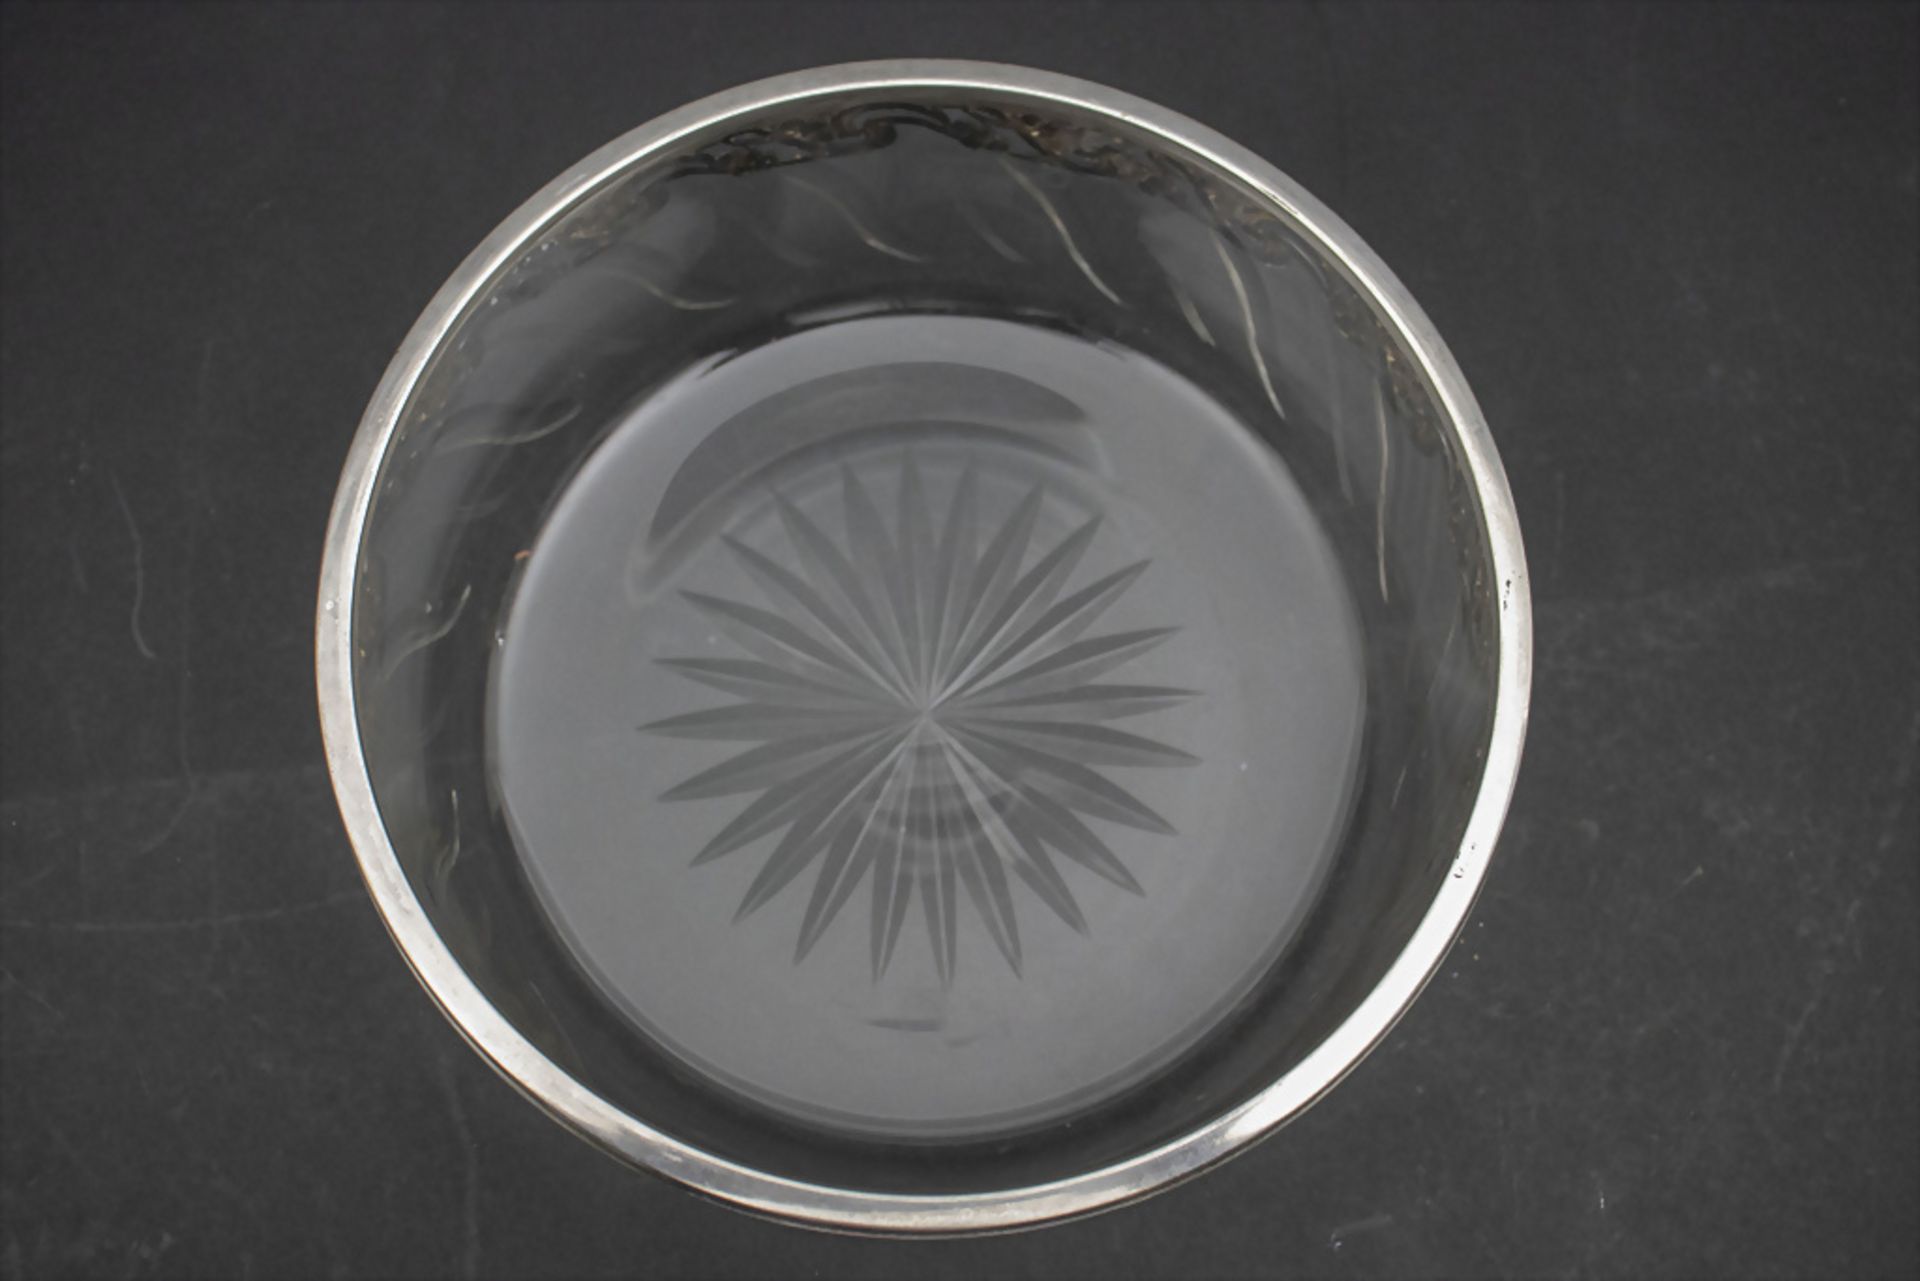 Jugendstil Glasschale mit Montur / An Art Nouveau glass fruit bowl with plated mount, WMF, ... - Image 4 of 6